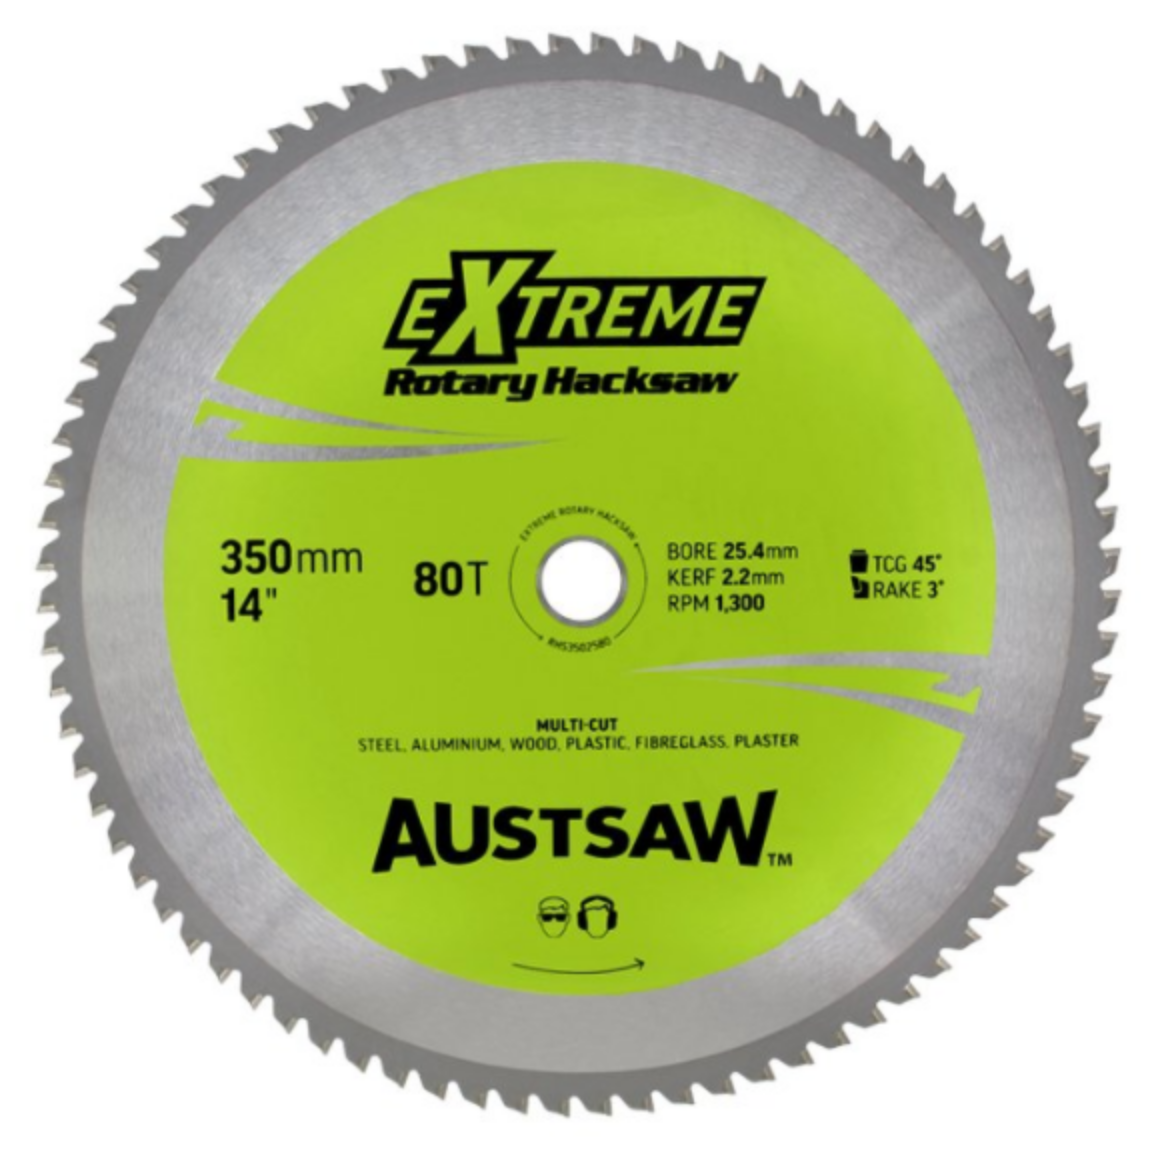 Picture of Austsaw Rotary Hacksaw Blade - Multi Purpose 14" 350 x 25.4 x 80 Teeth (TITANIUM CARBIDE TEETH)